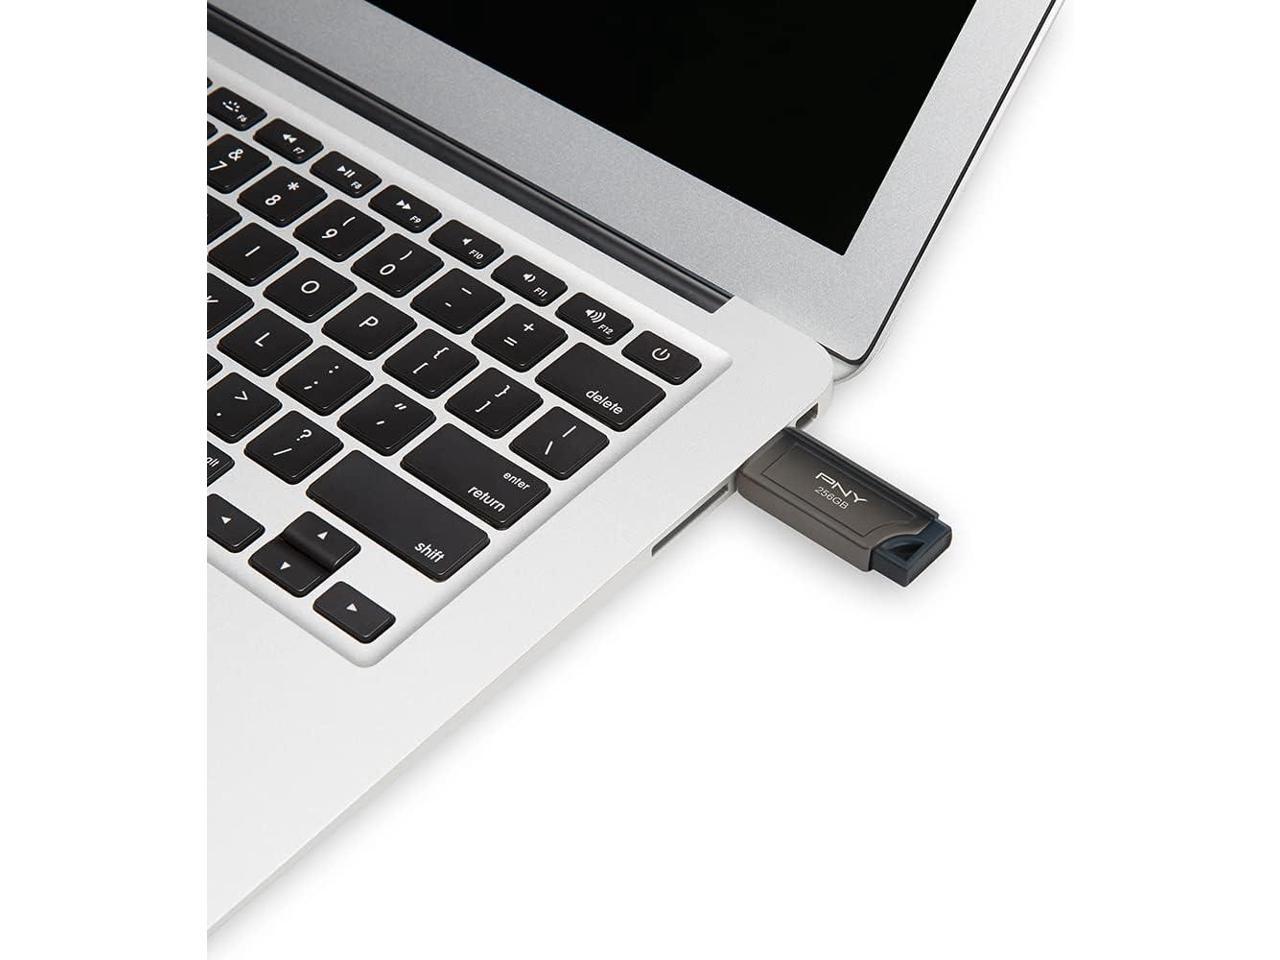 PNY PRO Elite V2 USB 3.2 Gen 2 Flash Drive - 256 GB - USB 3.2 (Gen 2) - 600 MB/s Read Speed - 250 MB/s Write Speed - Black - 2 Year Warranty - image 3 of 4